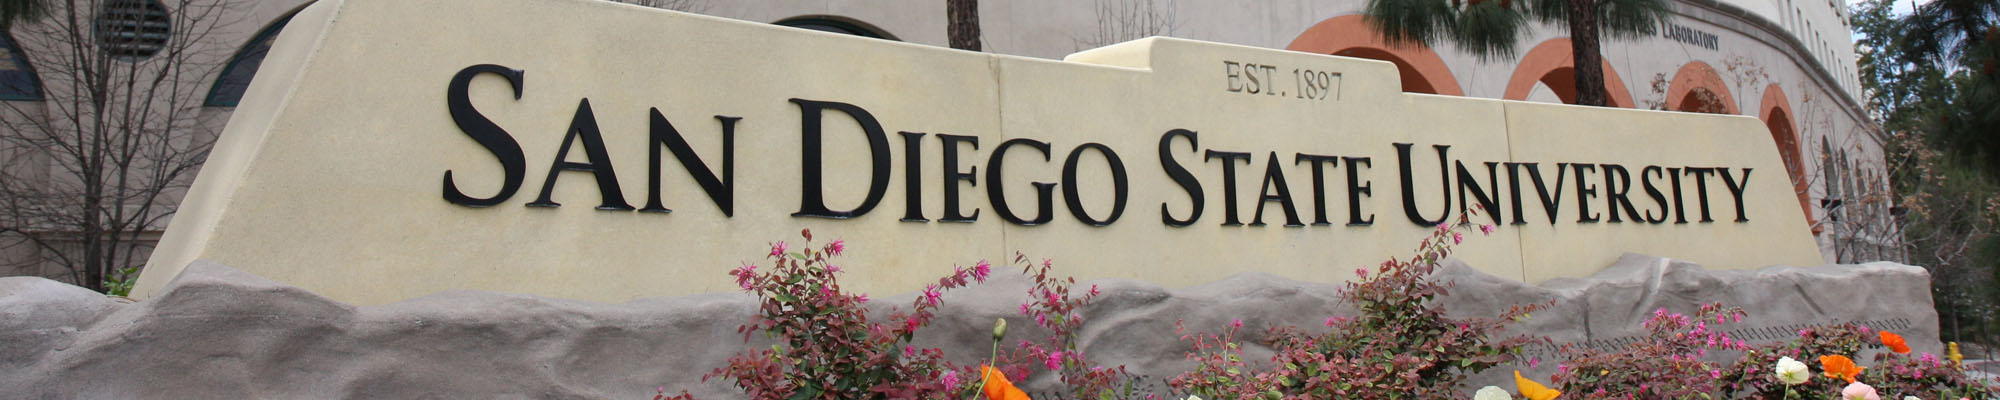 San Diego State University Est. 1897